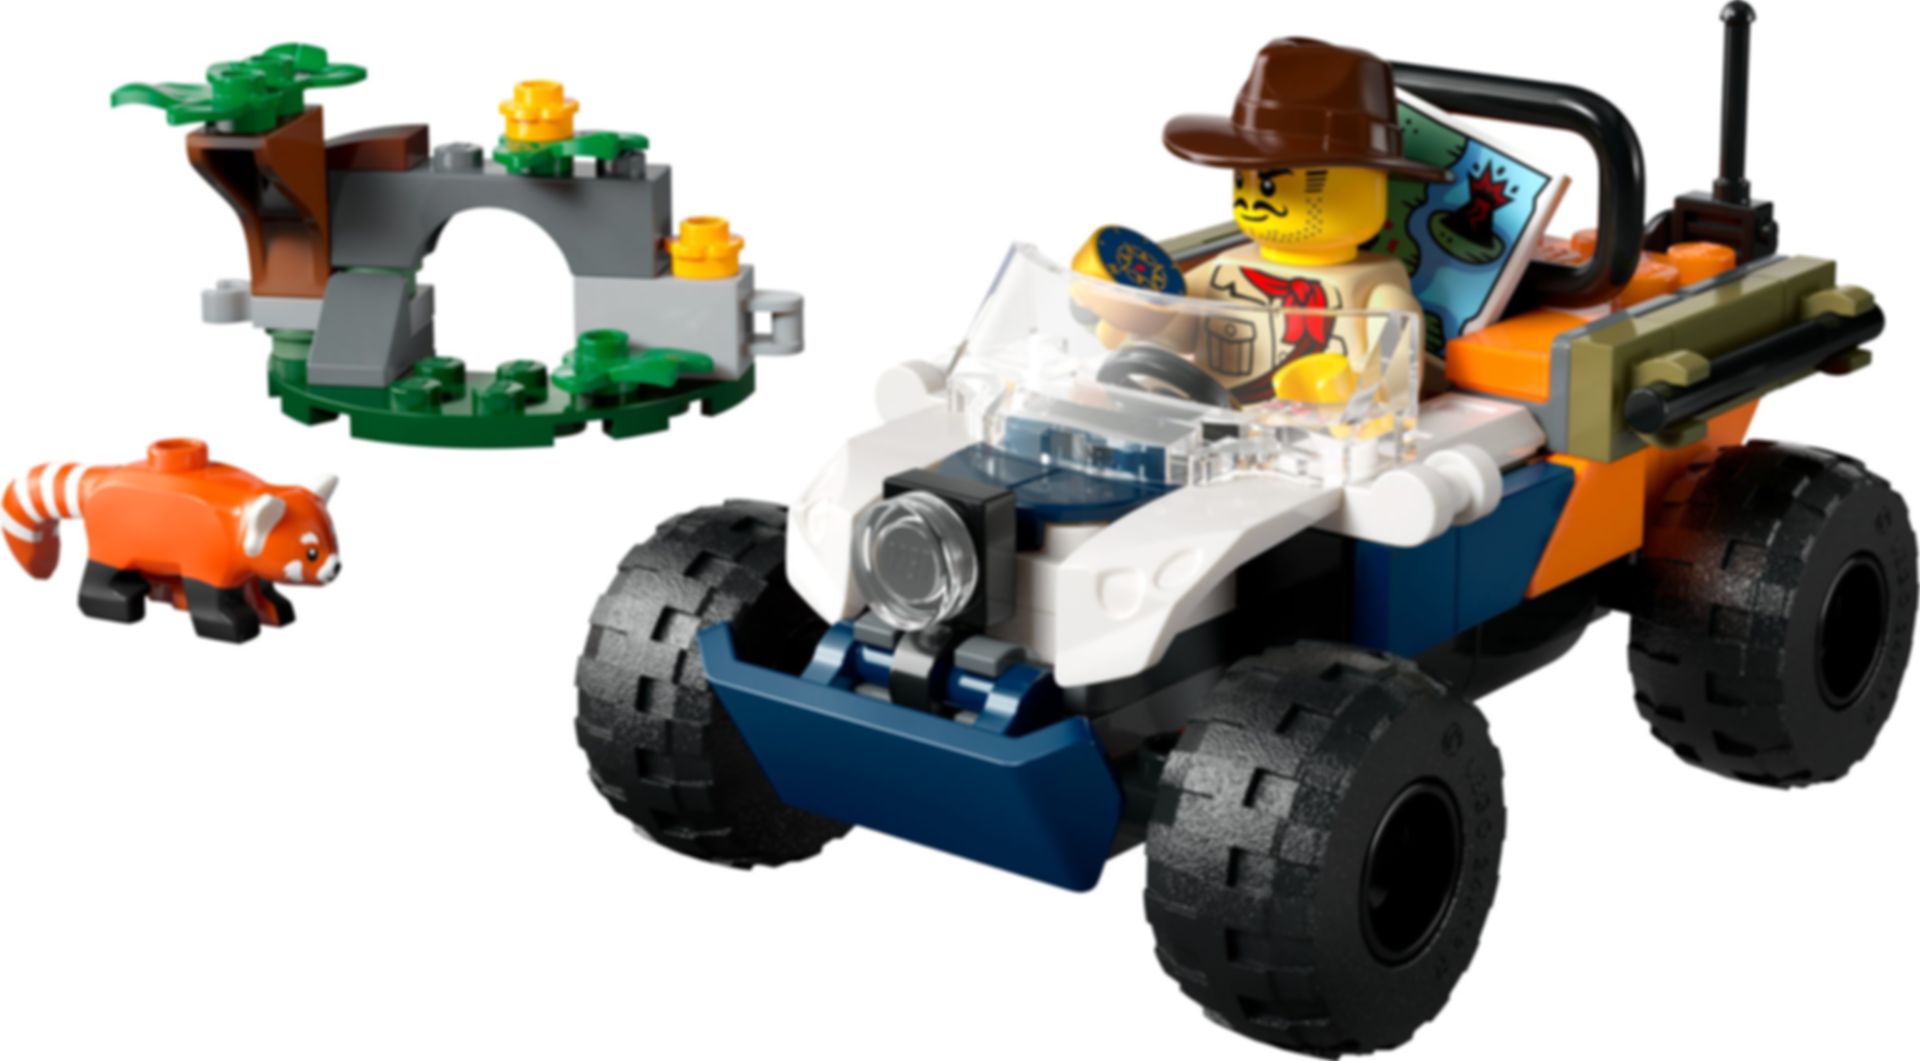 LEGO® City Jungle Explorer ATV Red Panda Mission components